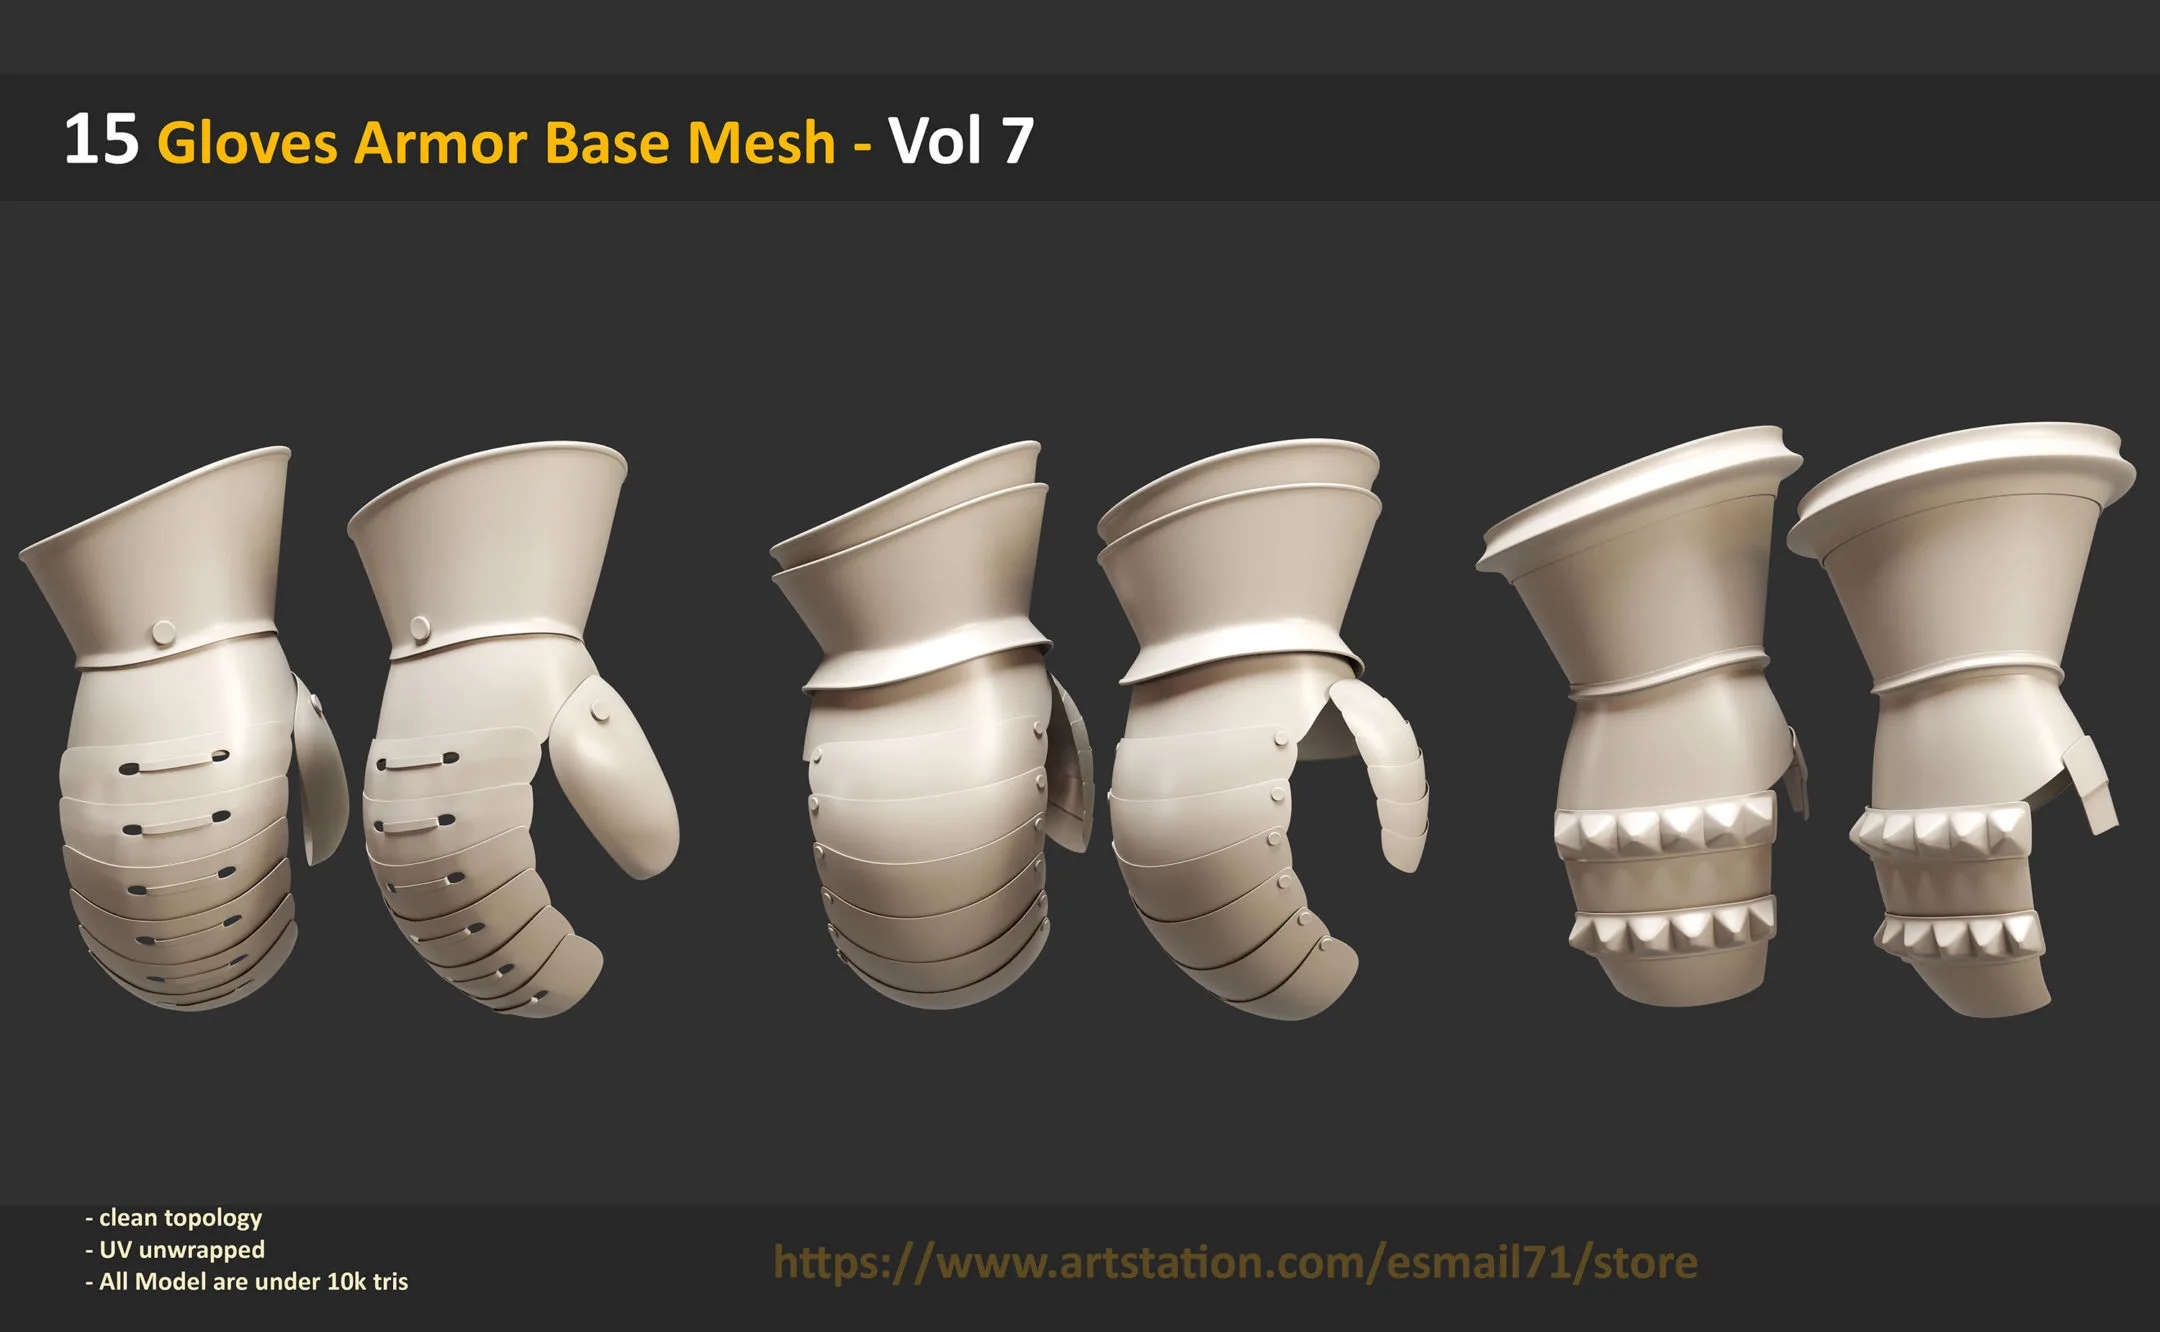 15 Gloves Armor Base Mesh - Vol 7